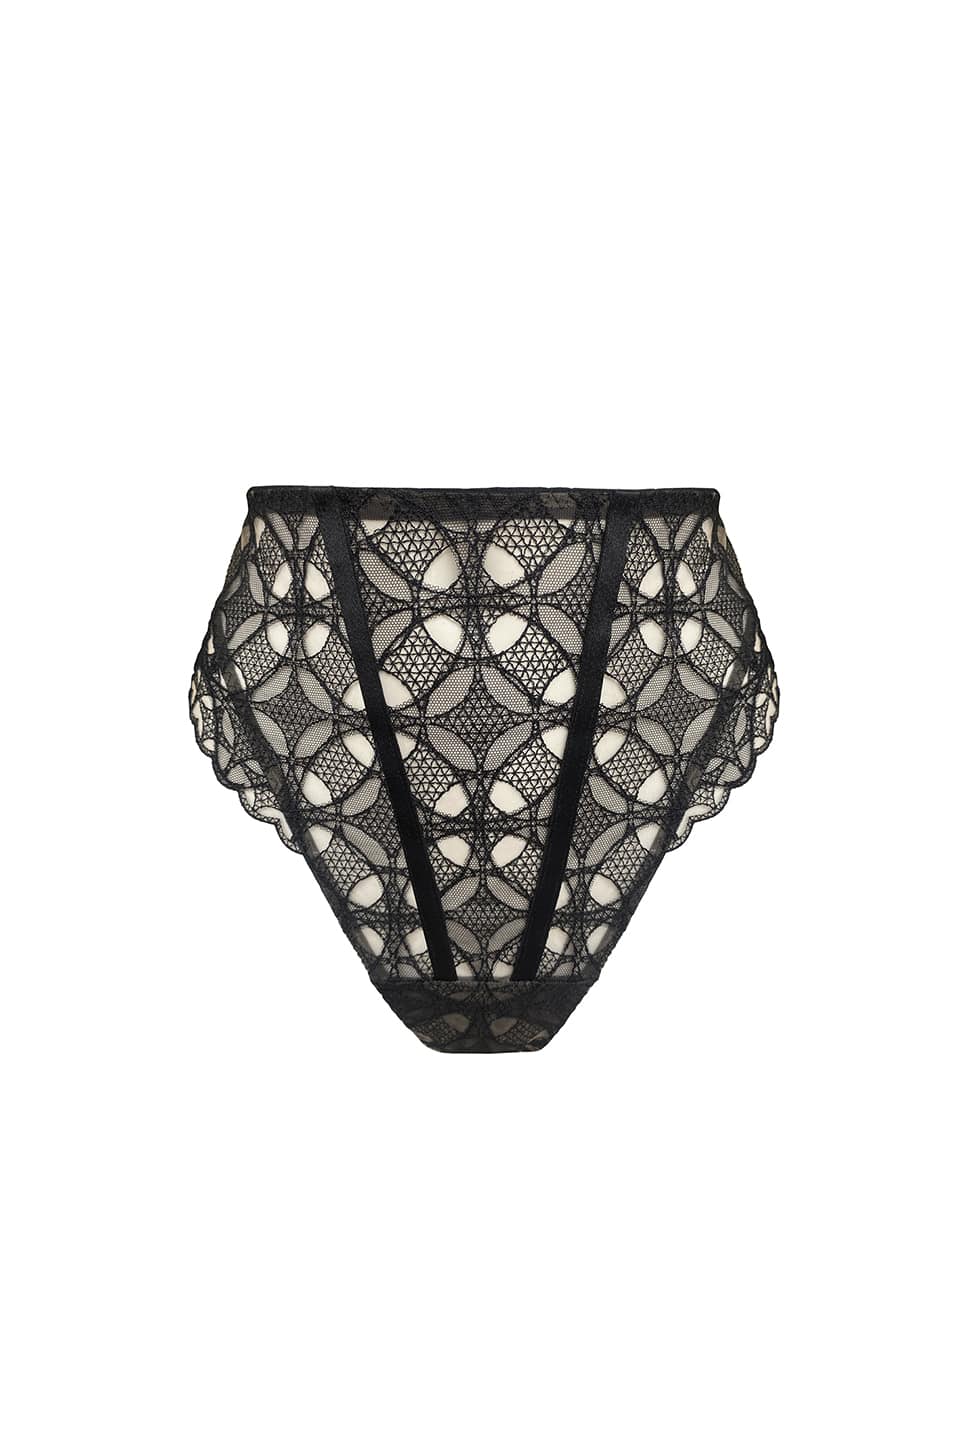 Shop online trendy Black Undergarments from Atelier Bordelle Fashion designer. Product gallery 1